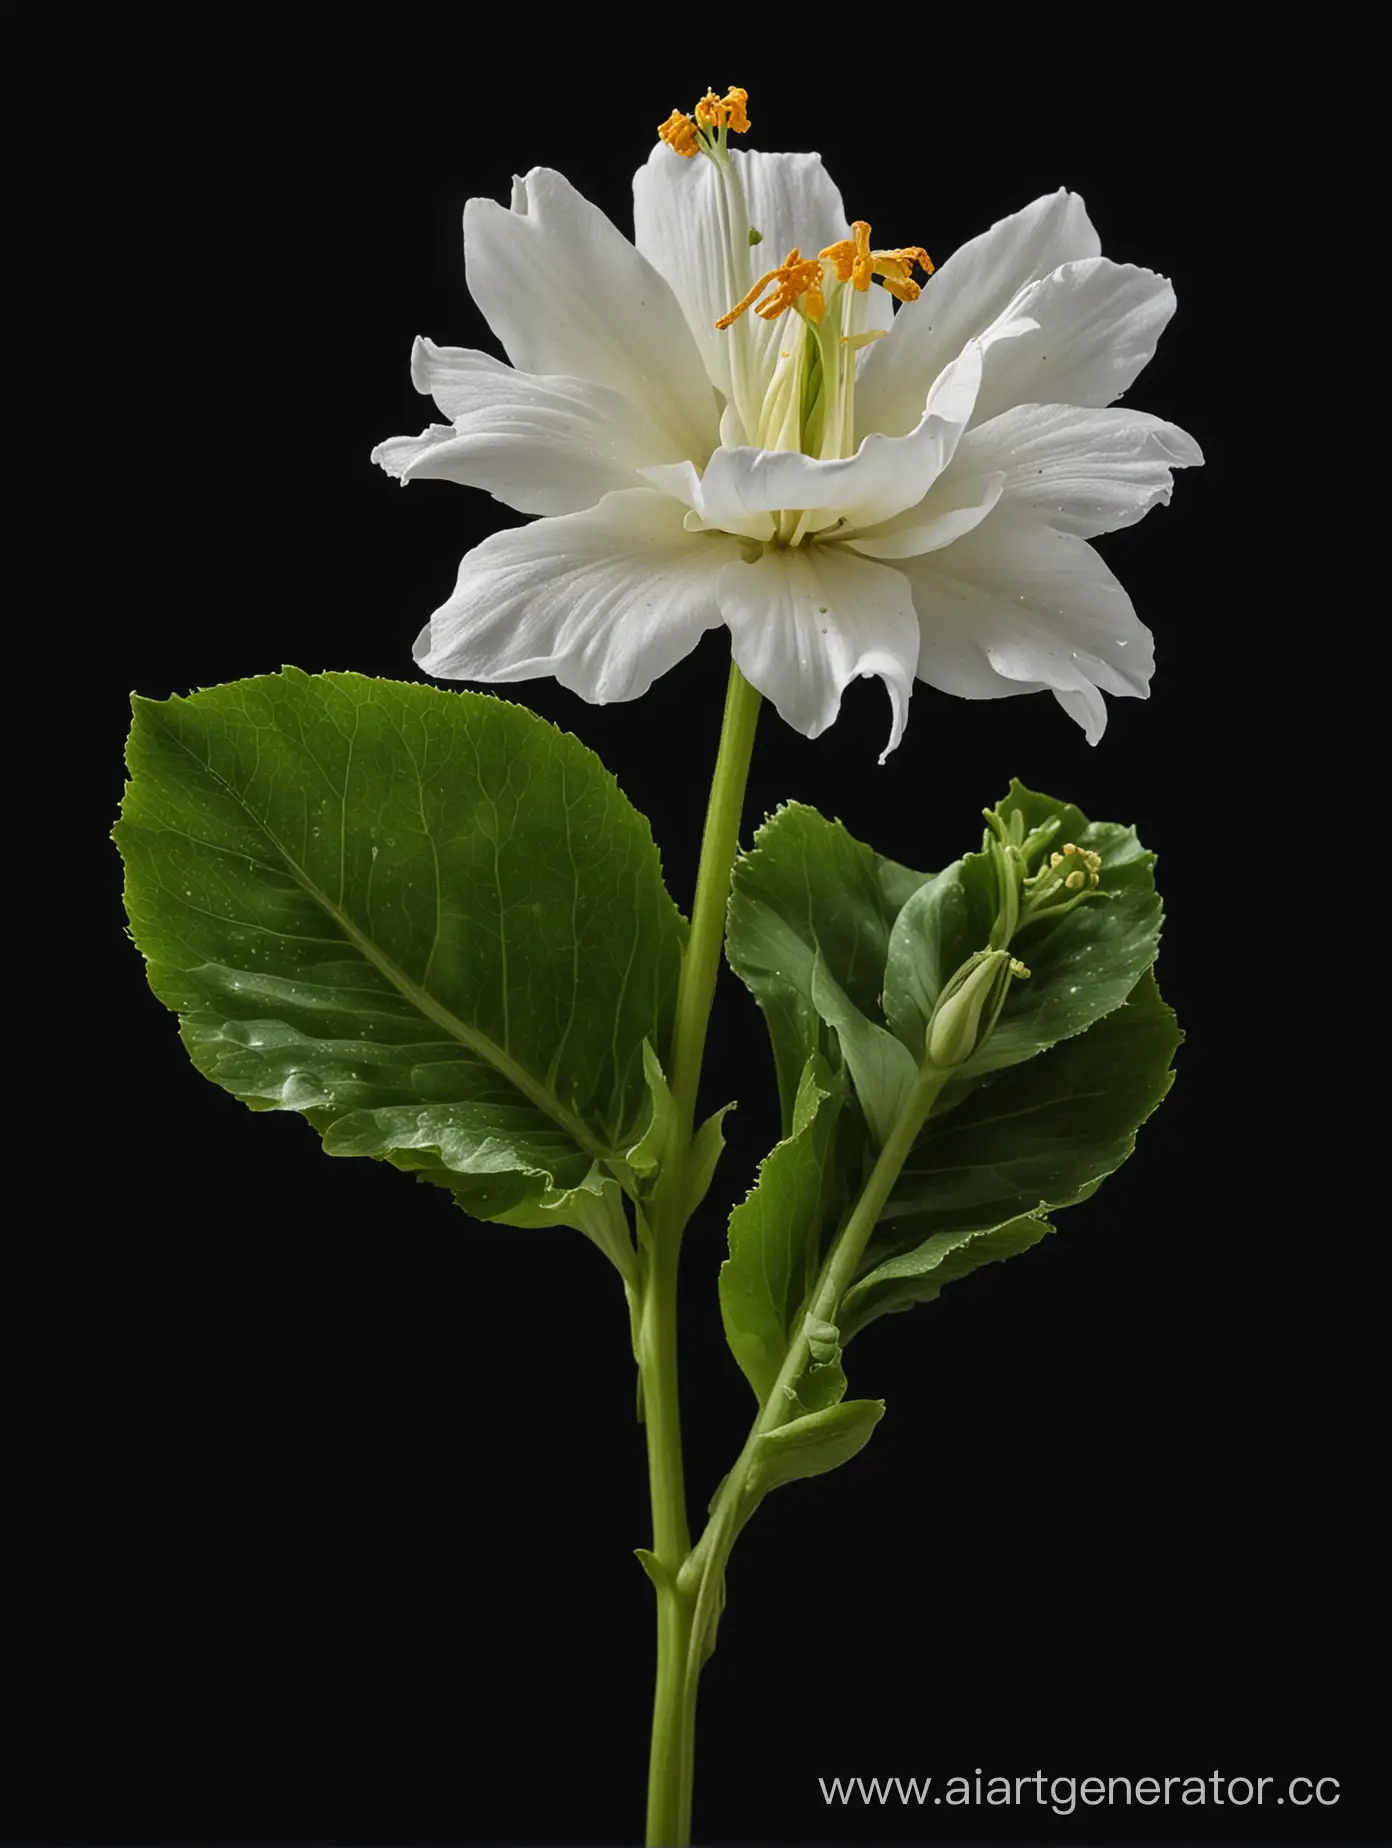 Amarnath-Flower-Blooming-on-Elegant-Black-Background